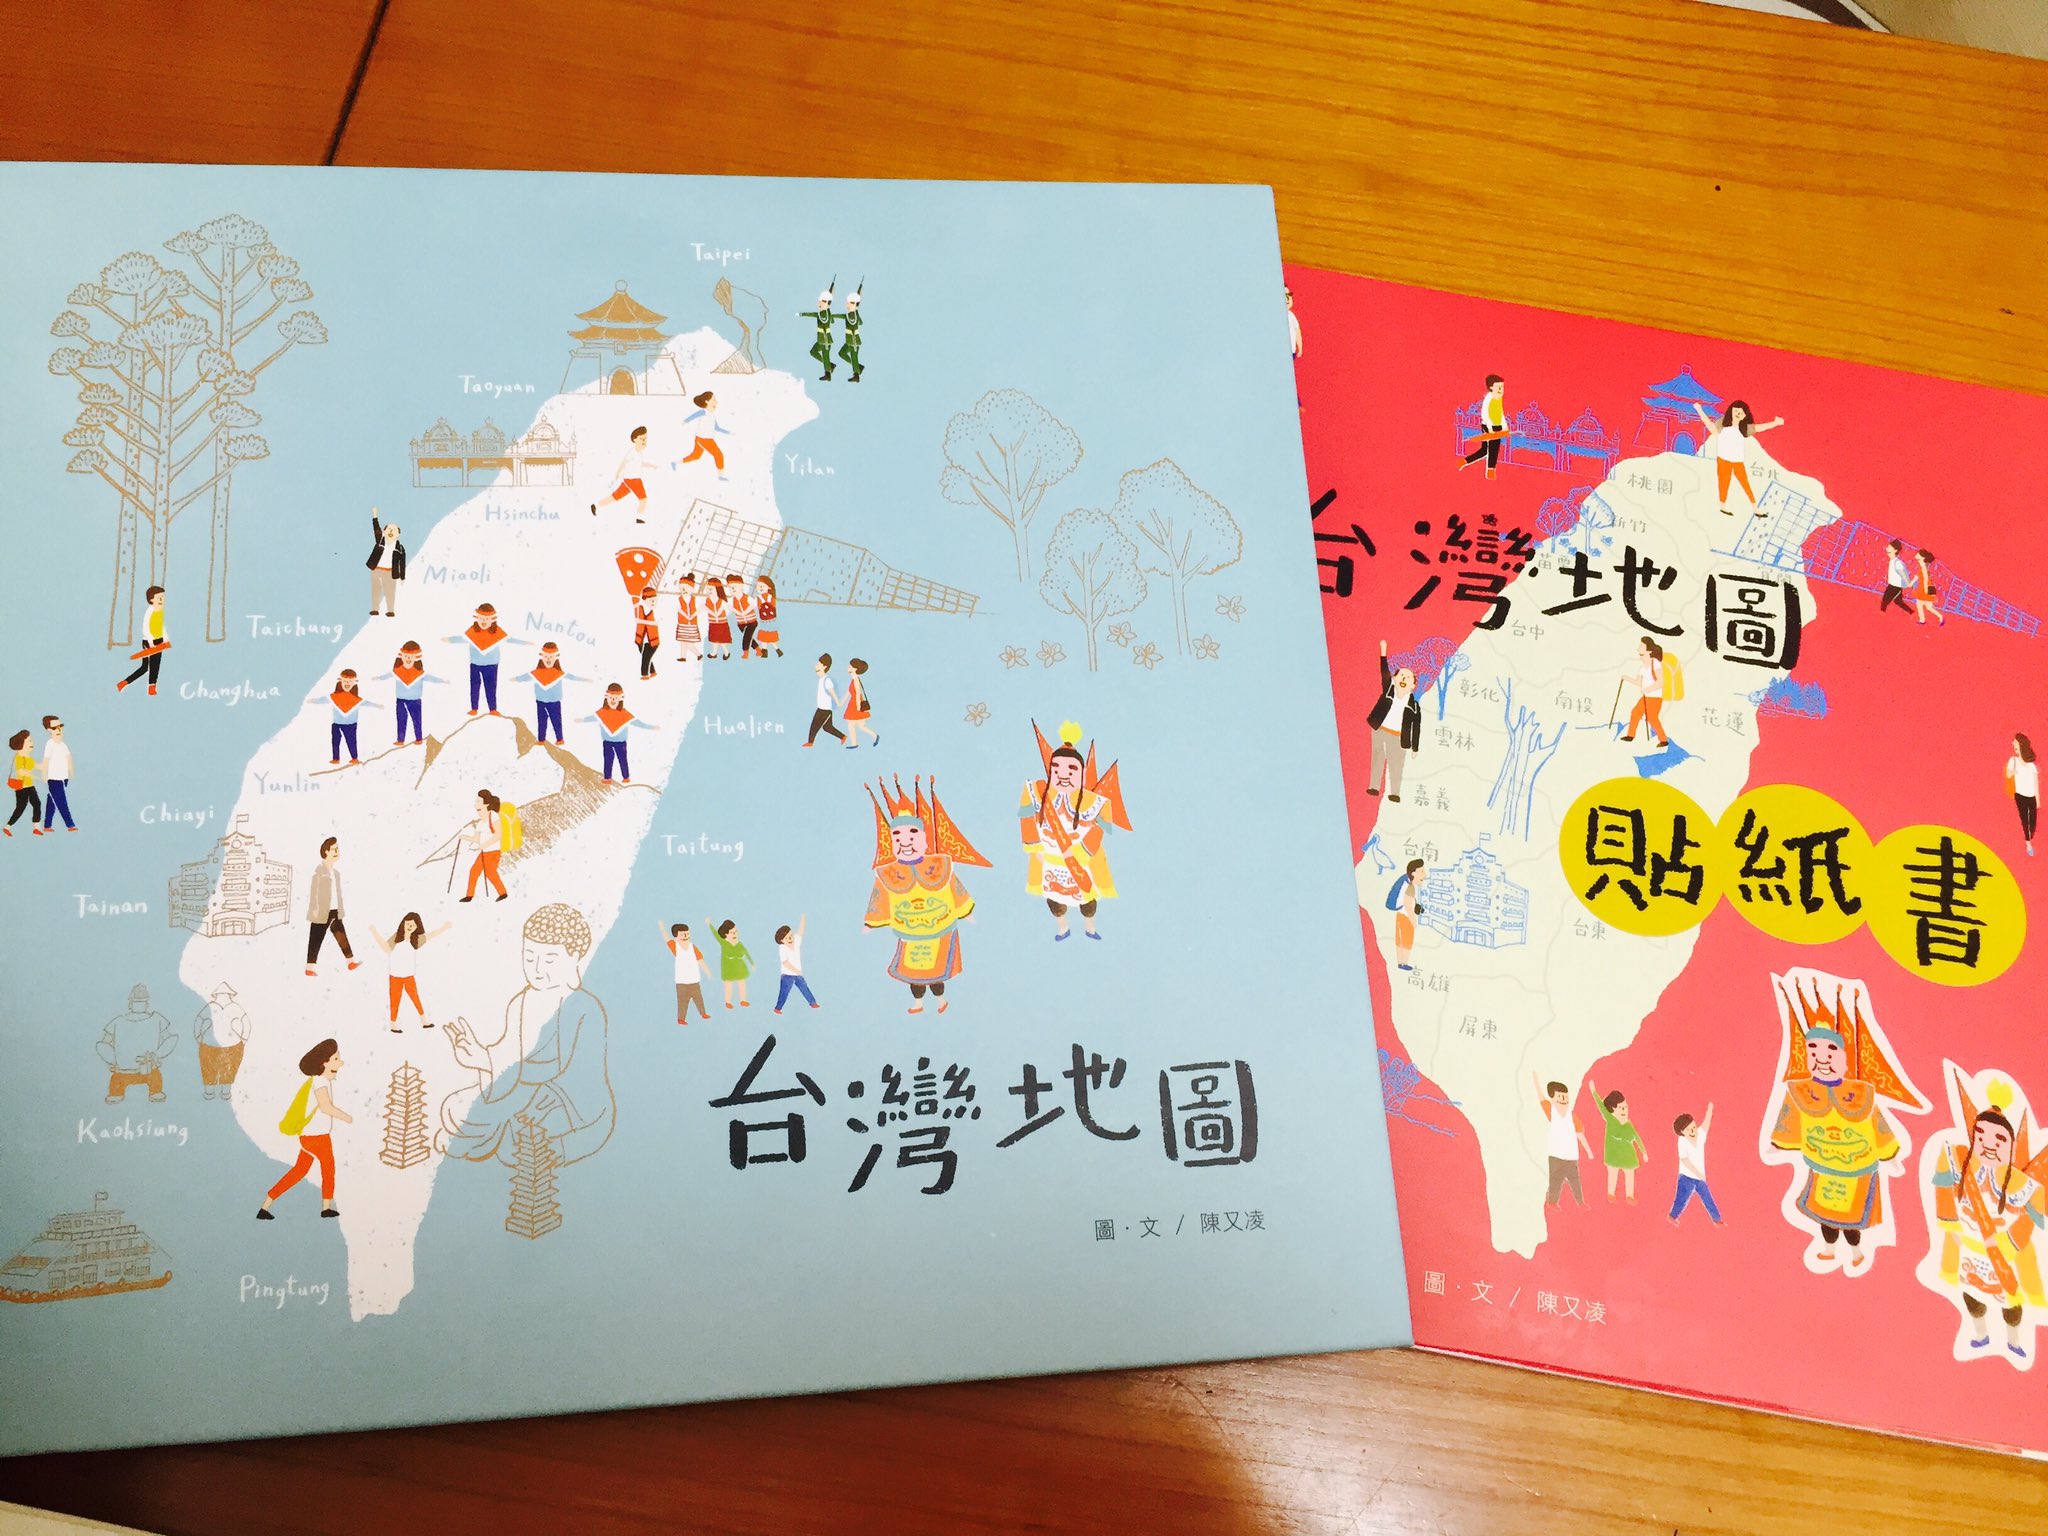 Uzivatel カフェ台湾華語オンラインレッスン Na Twitteru 台湾の 誠品書店 で買ってきました 中はいろんなかわいいイラストと観光地が載っていますので とっても便利な本です もう一冊はシール付きの台湾地図の本です 教室の忘年会の時に使えそうです 楽しみ